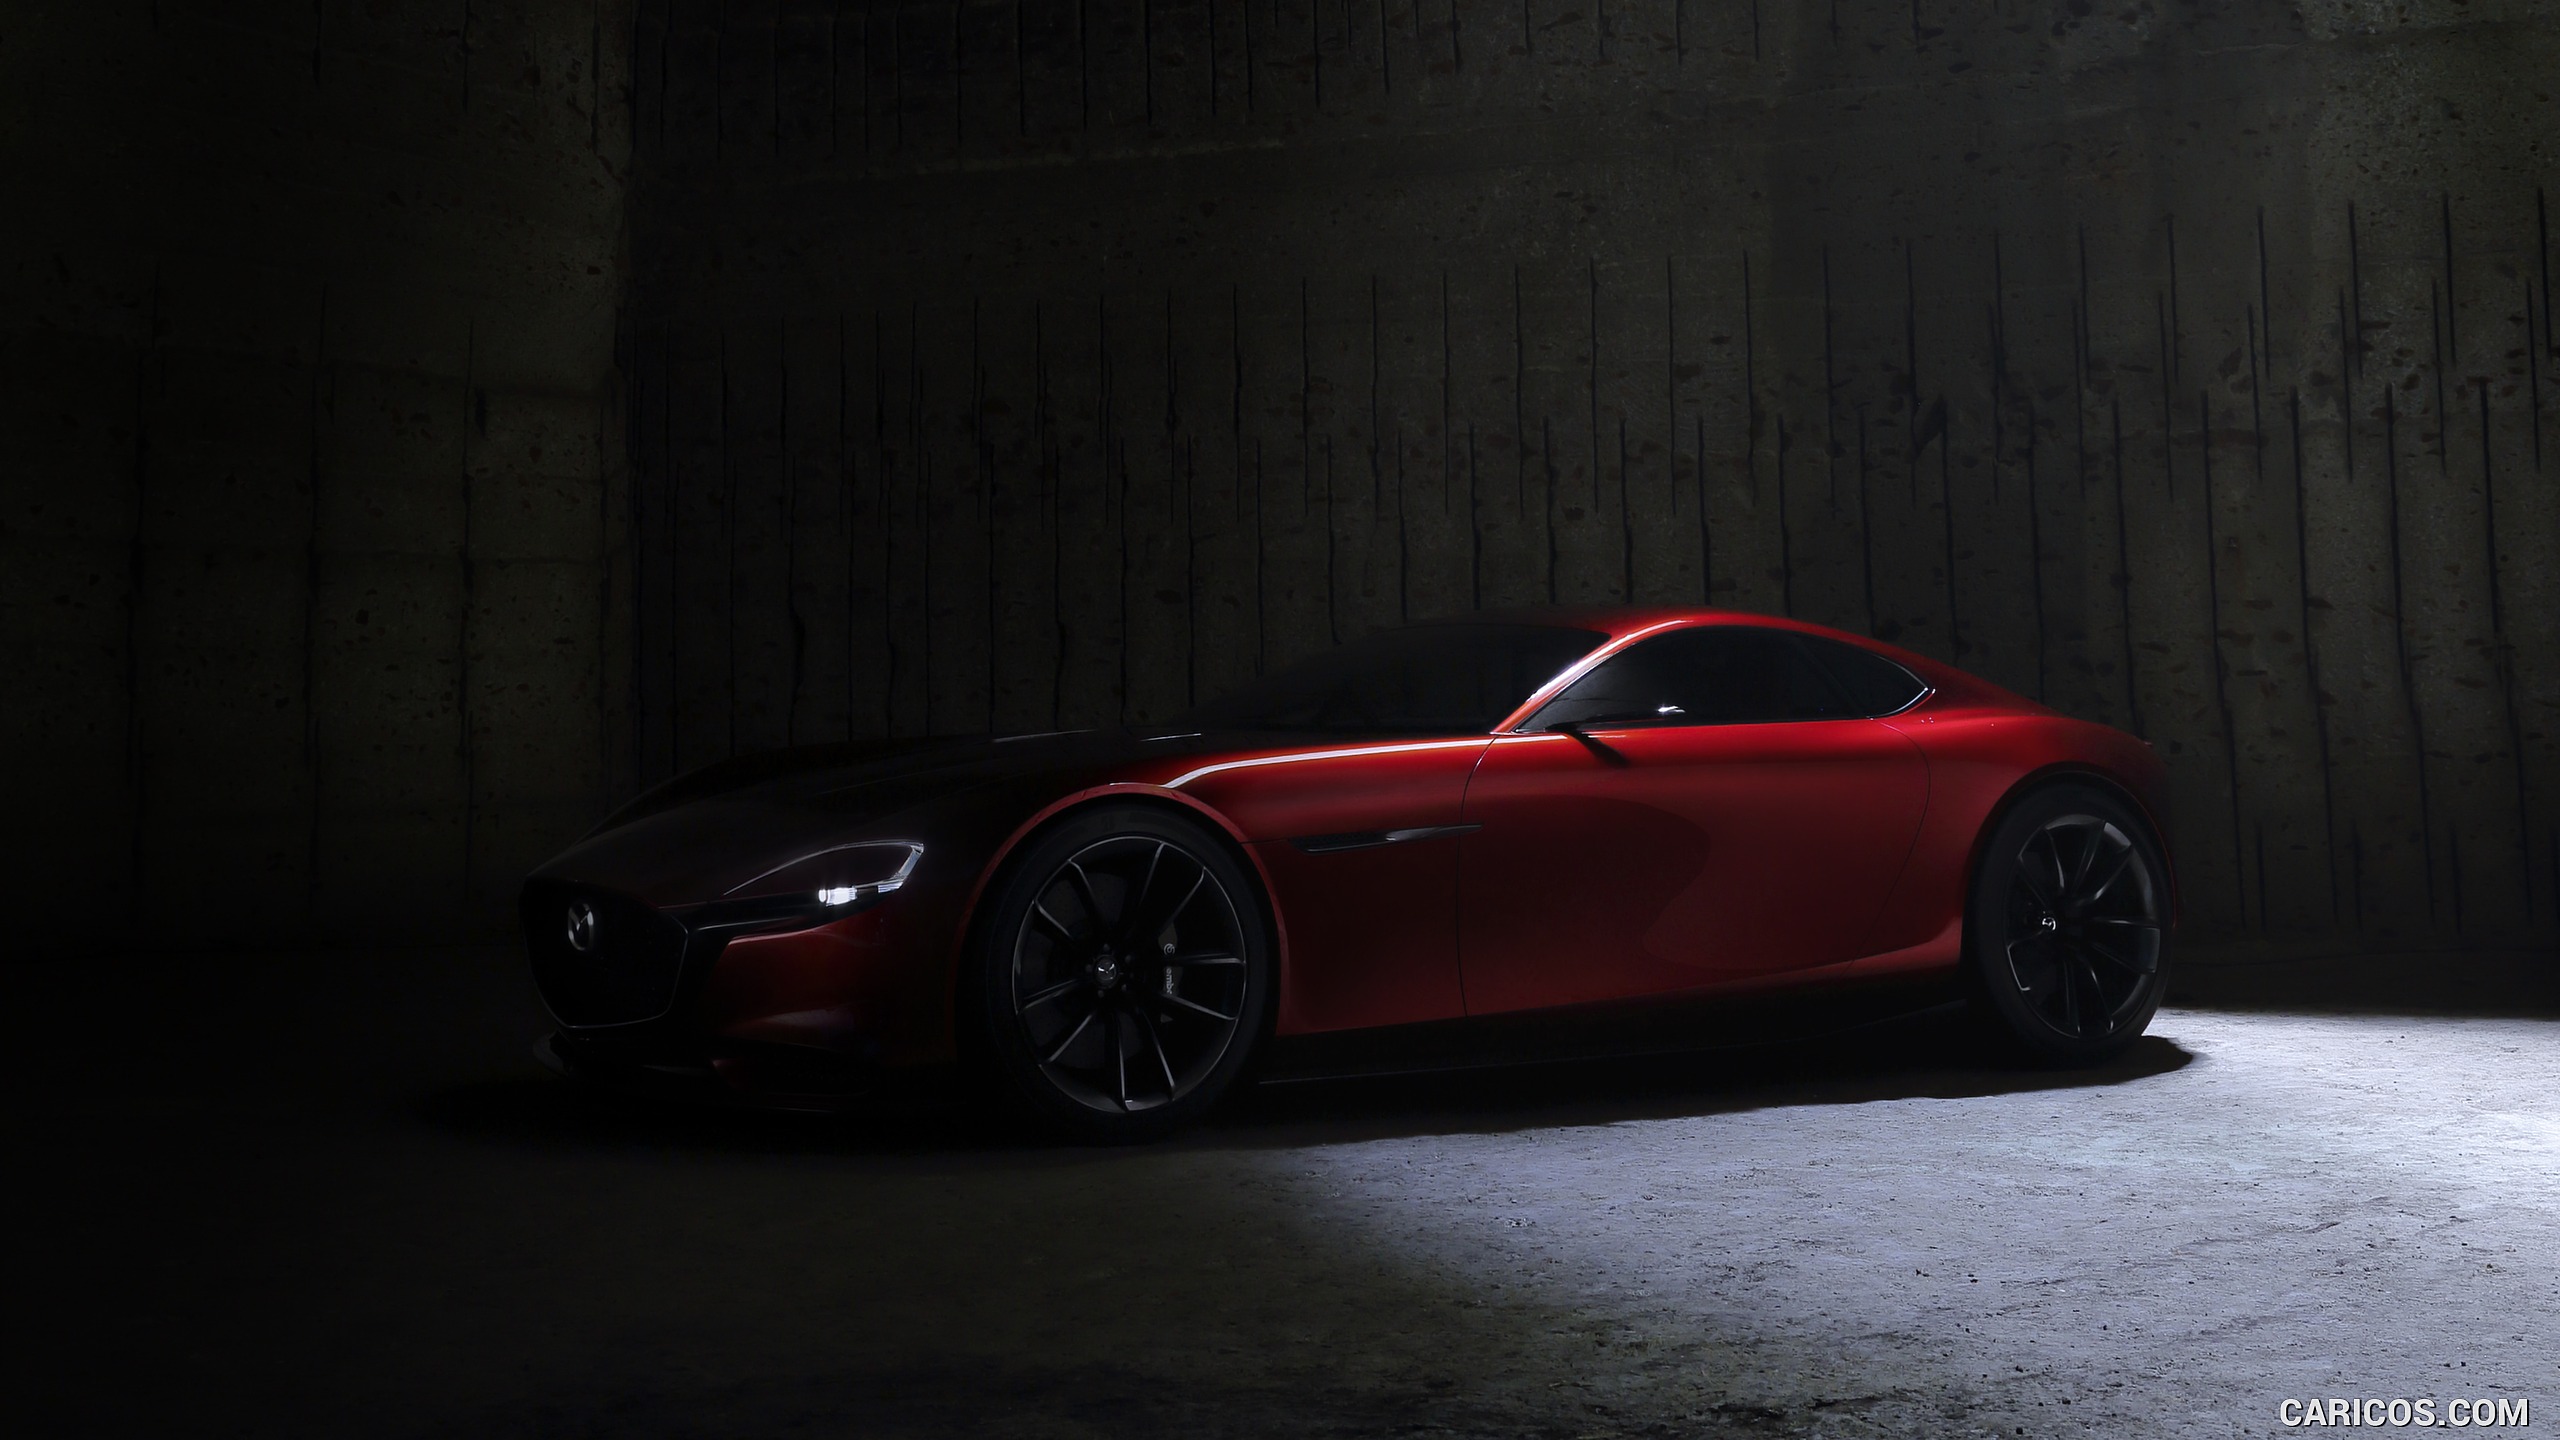 2015 Mazda RX-VISION Concept - Side, #14 of 16